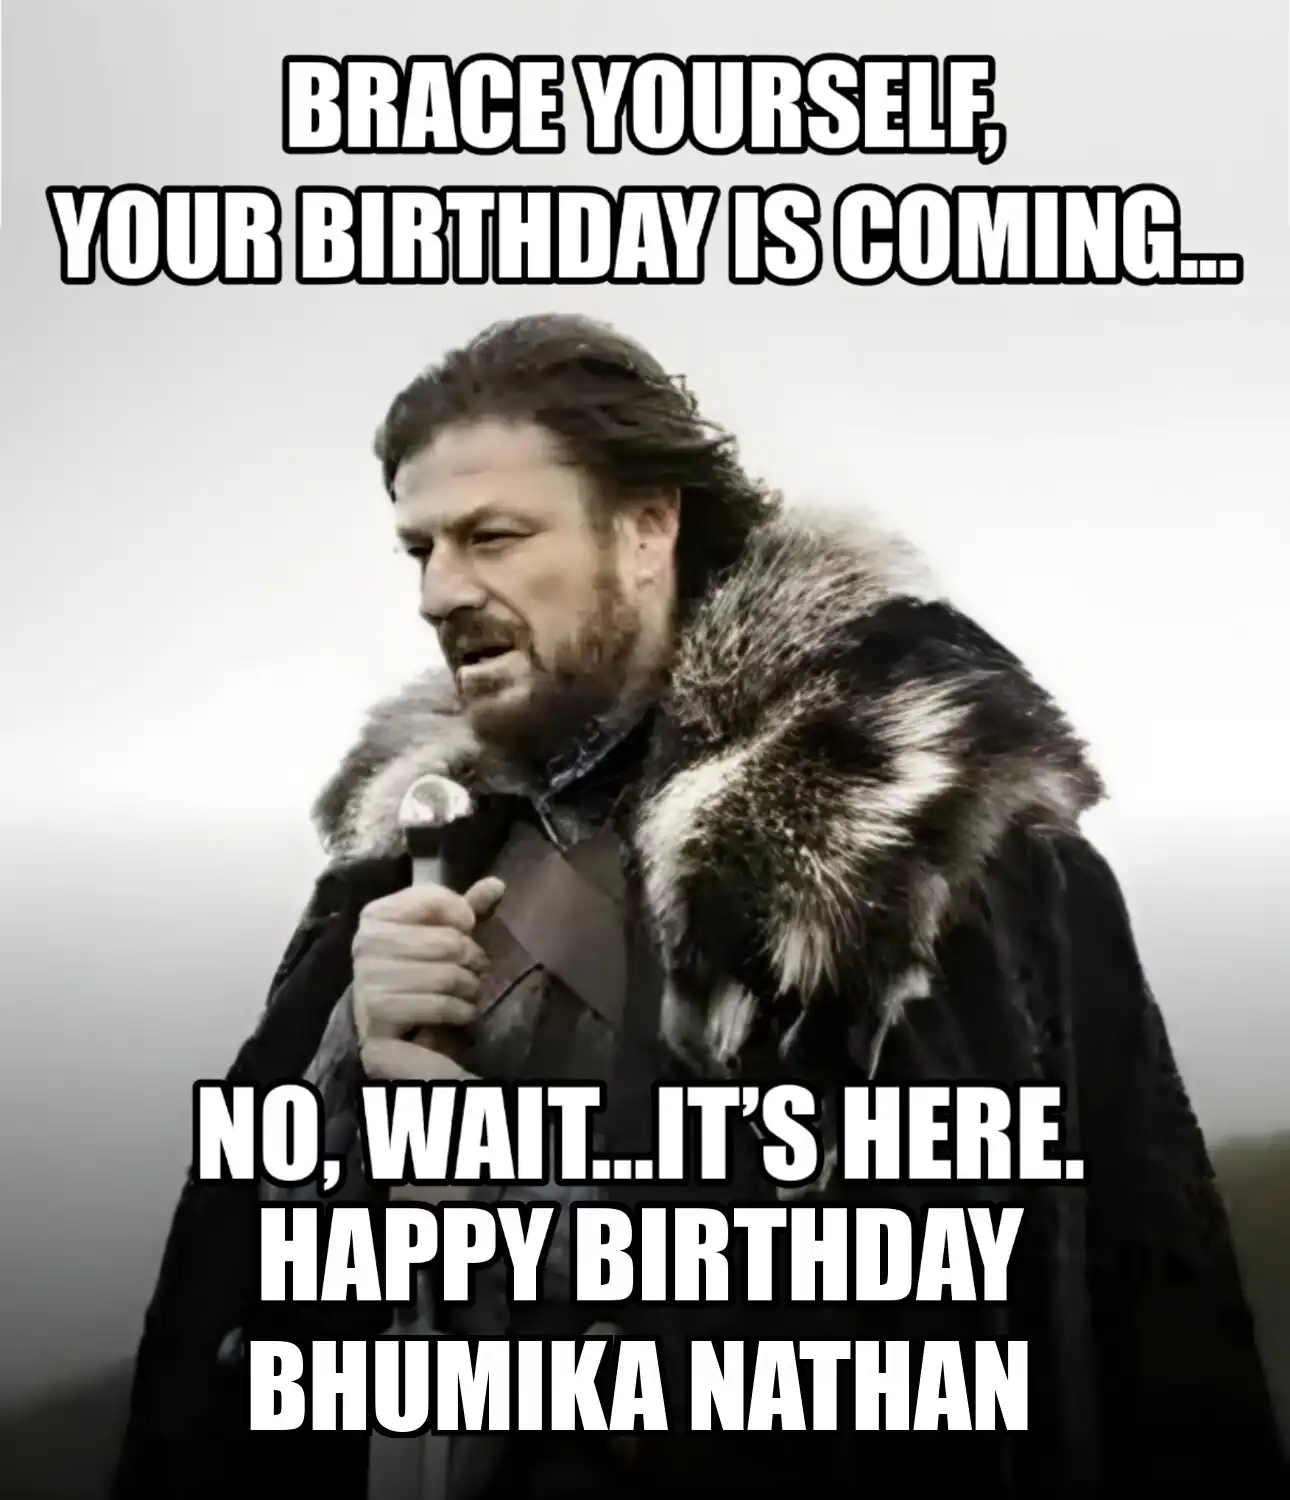 Happy Birthday Bhumika nathan Brace Yourself Your Birthday Is Coming Meme